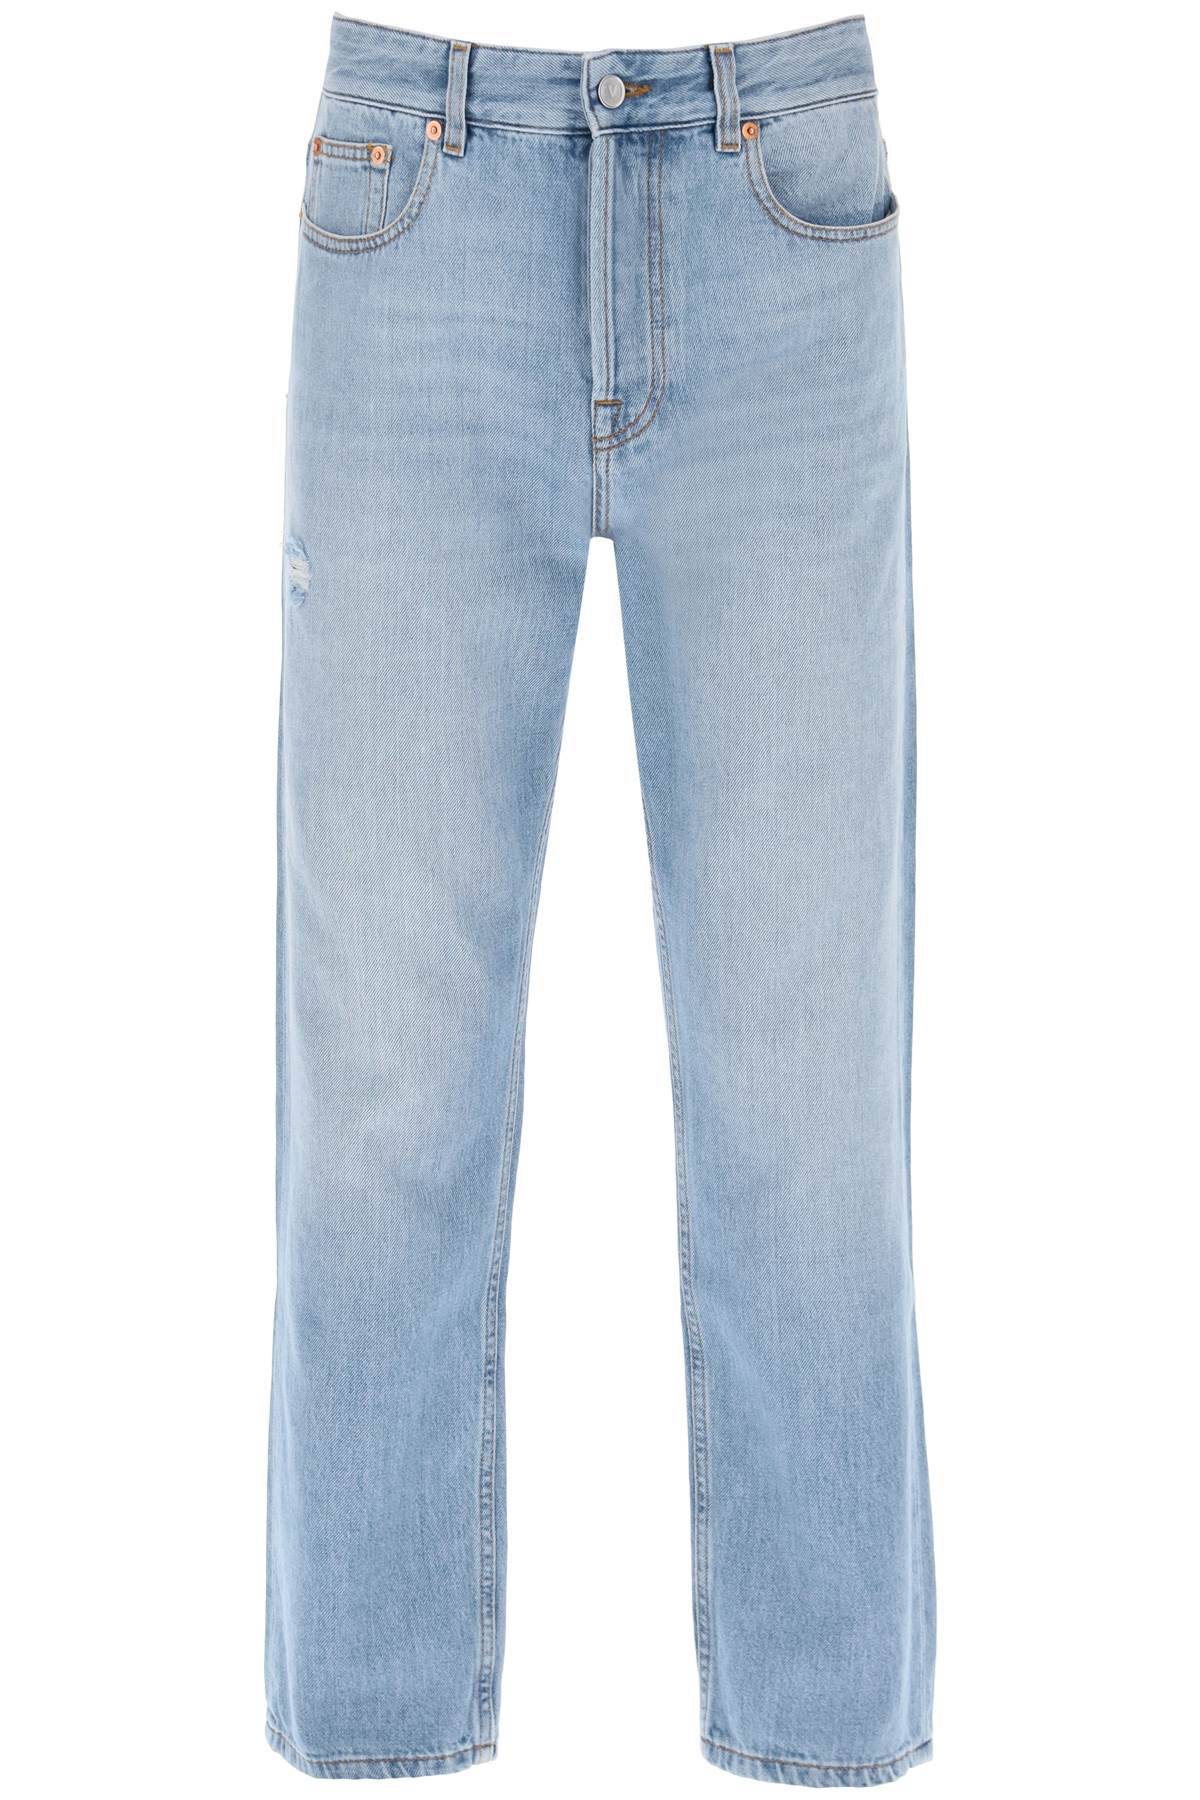 VALENTINO GARAVANI tapered jeans with medium wash